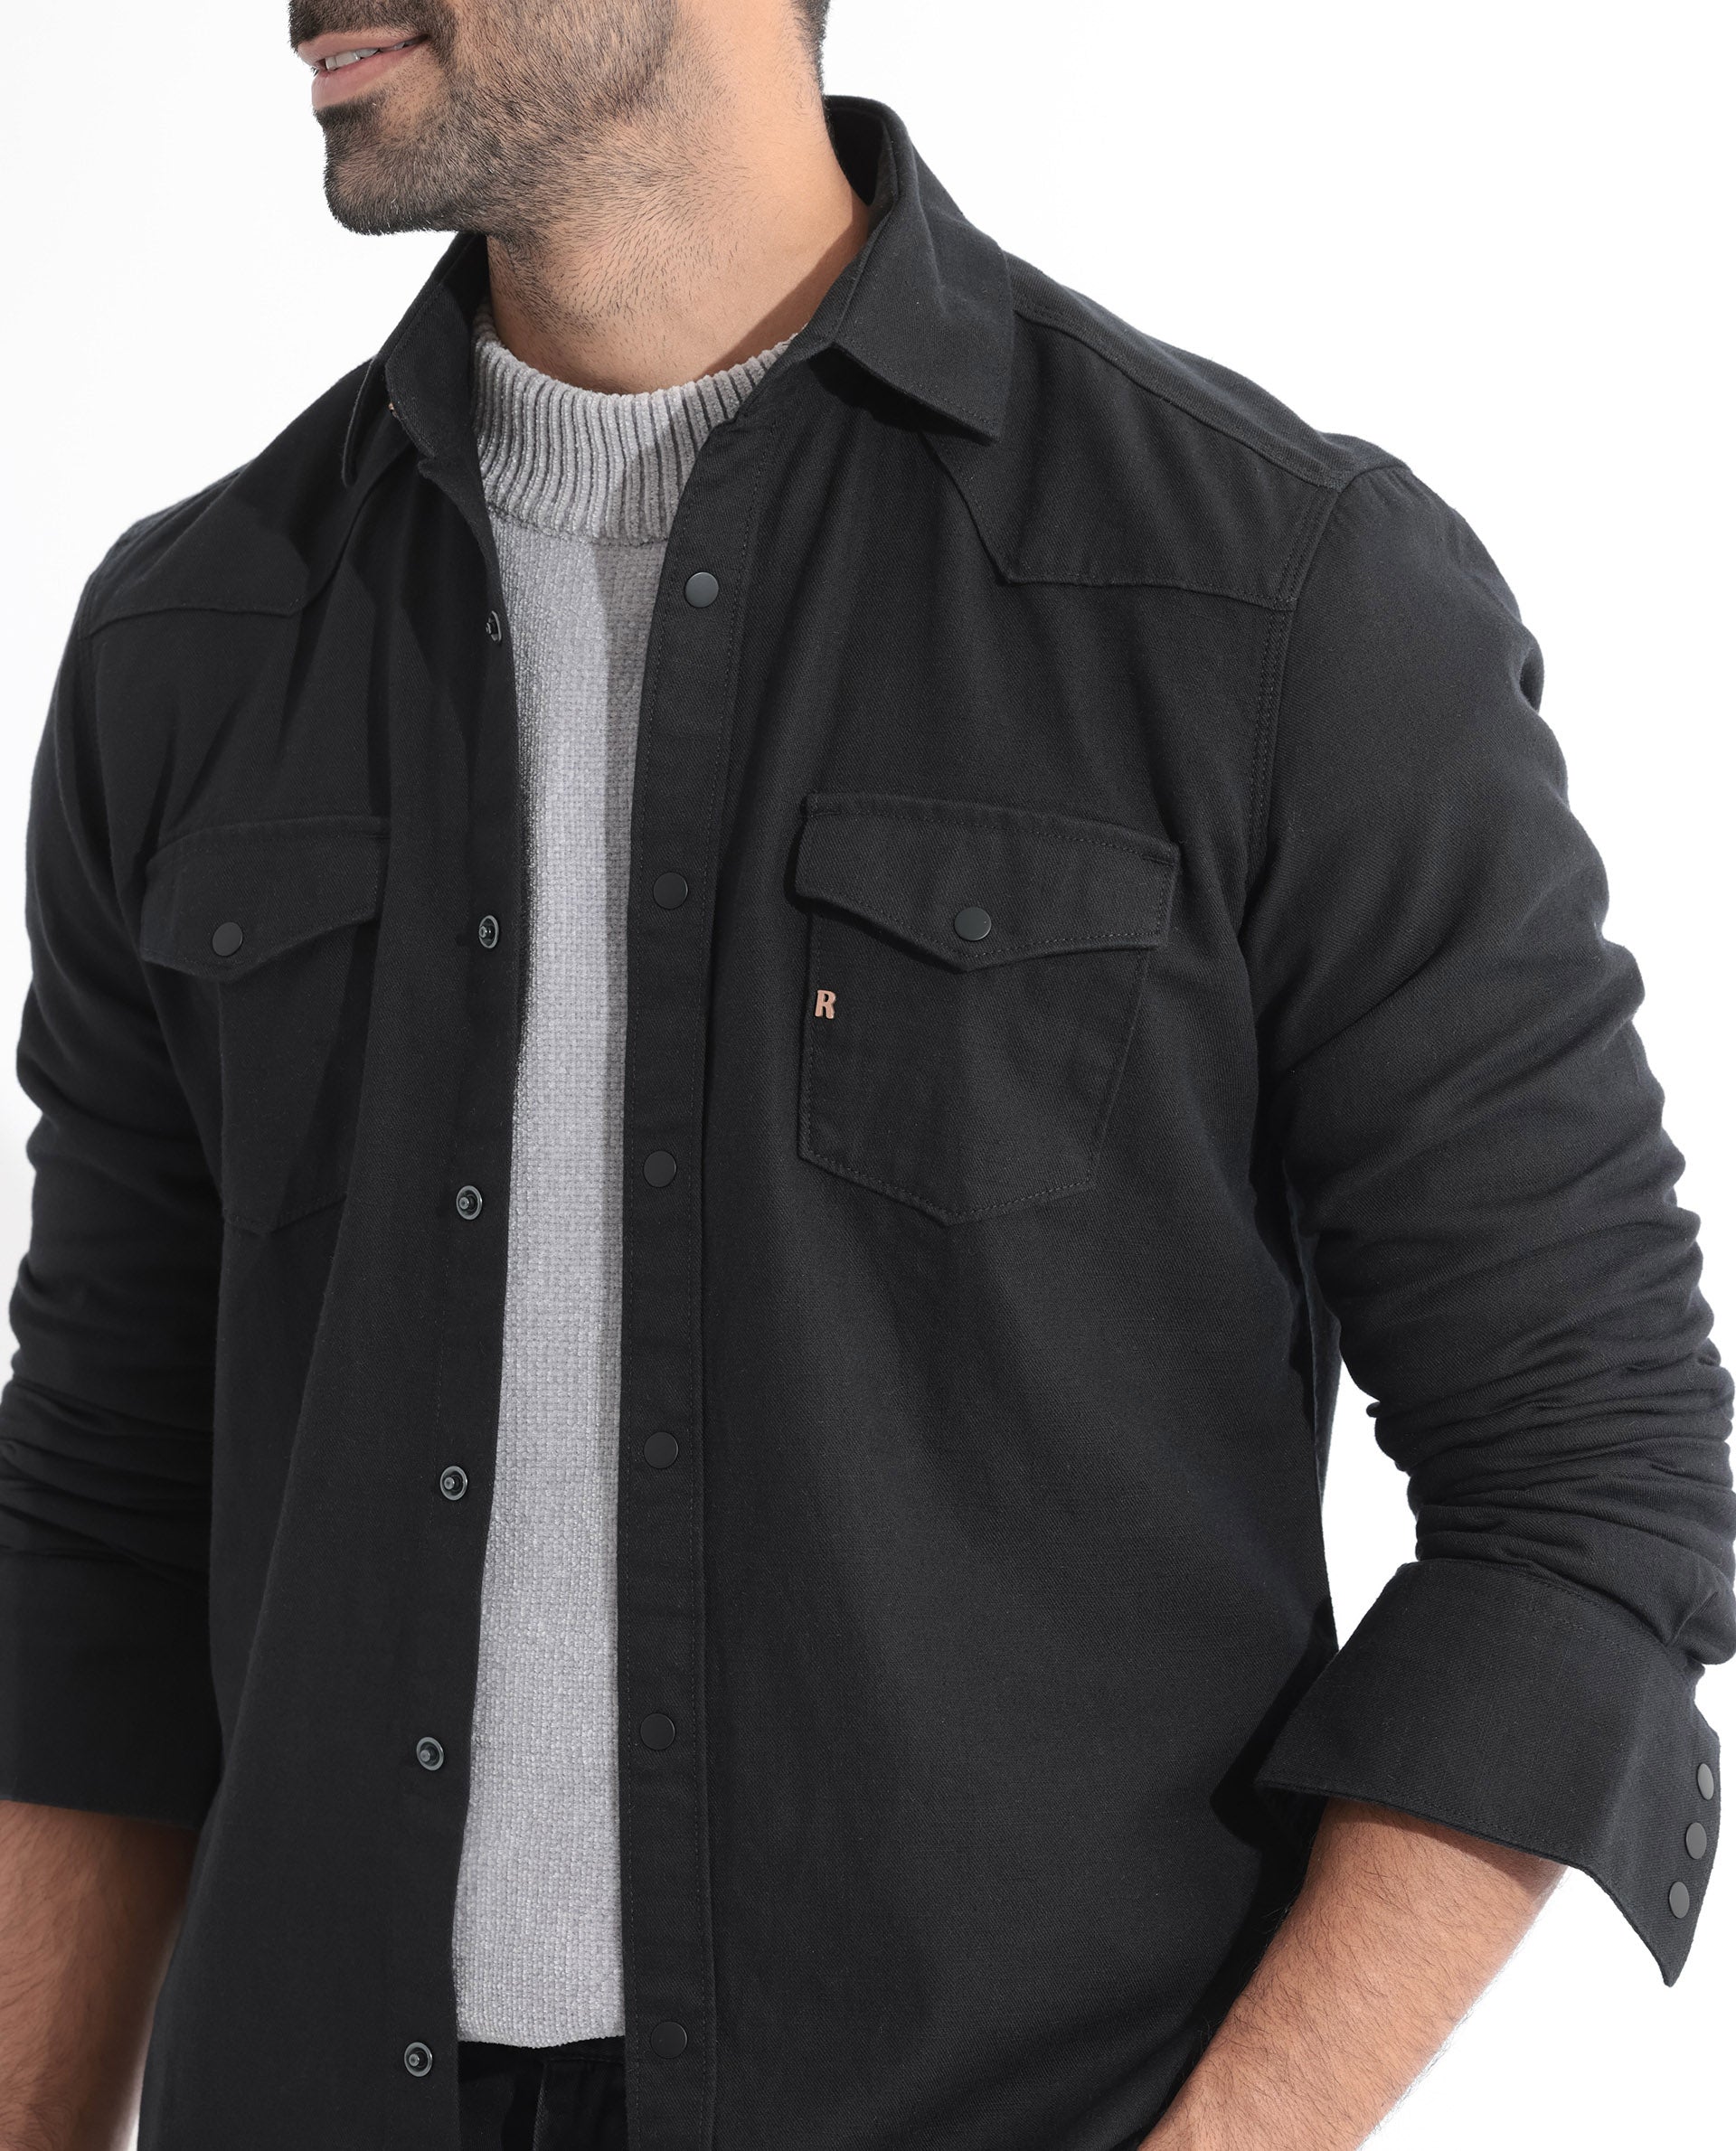 Mens Designer Wrangler Classic Casual Western Denim Shirt Top | eBay